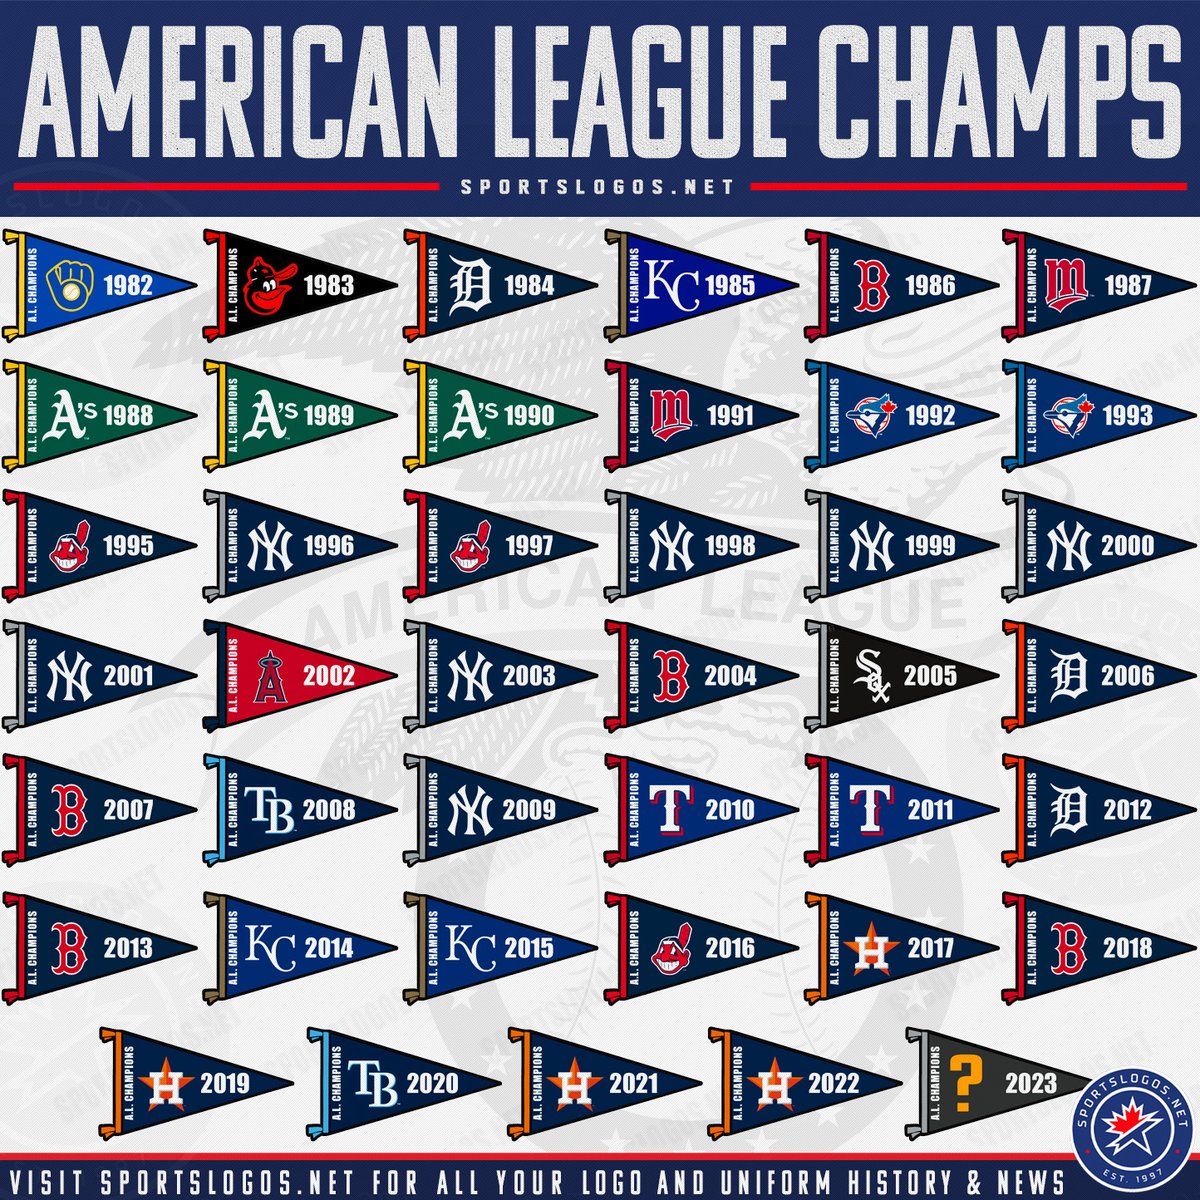 Chicago White Sox Primary Logo - American League (AL) - Chris Creamer's  Sports Logos Page 